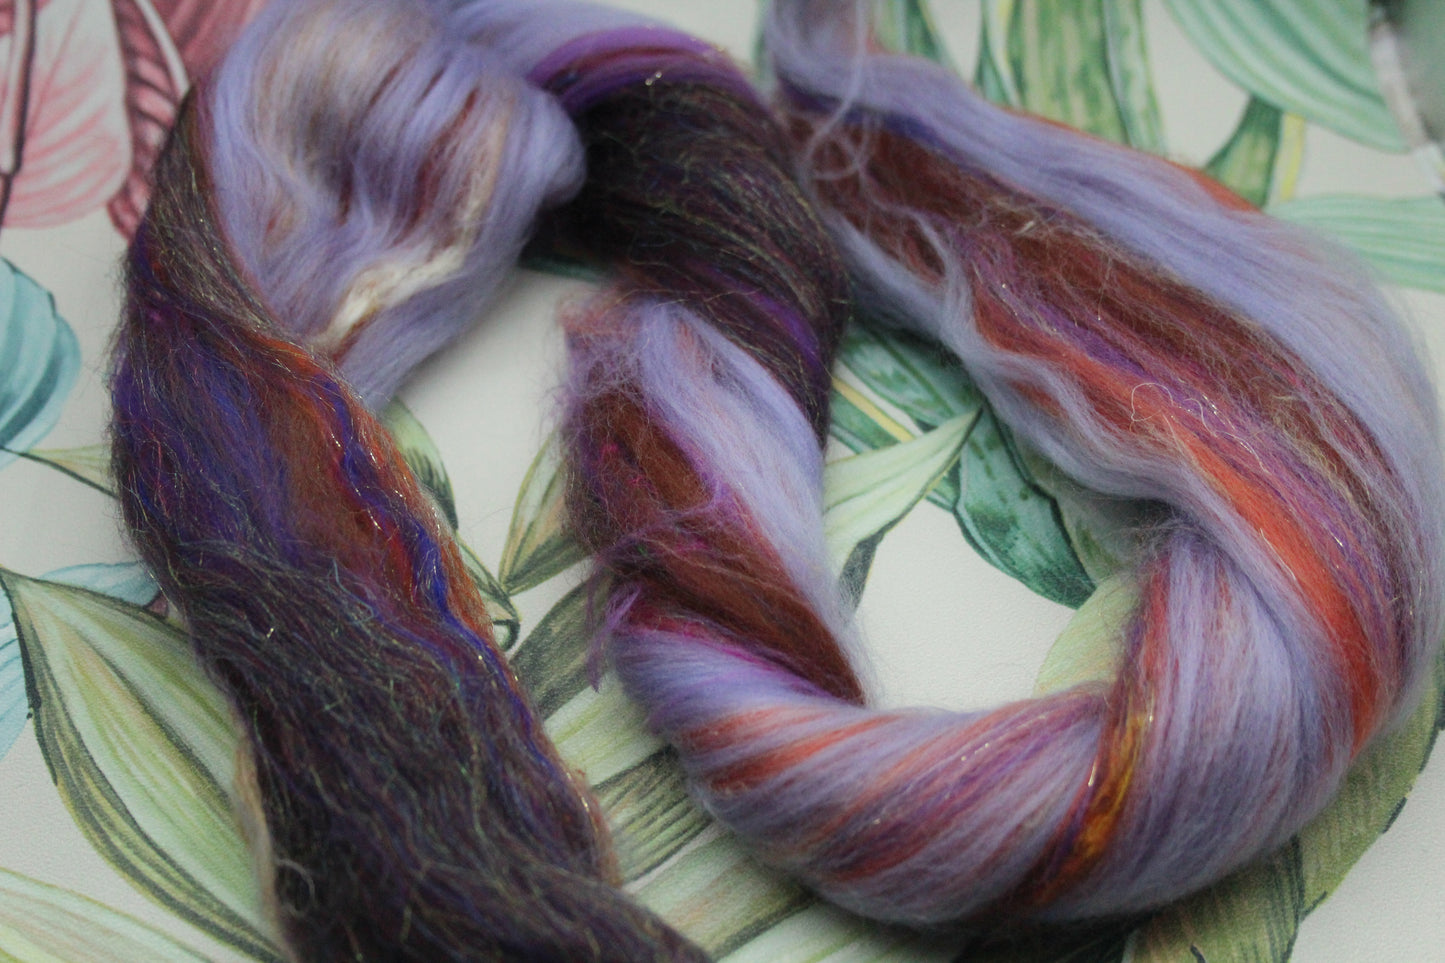 Merino Wool Blend - Purple Brown - 24 grams / 0.8 oz  - Fibre for felting, weaving or spinning